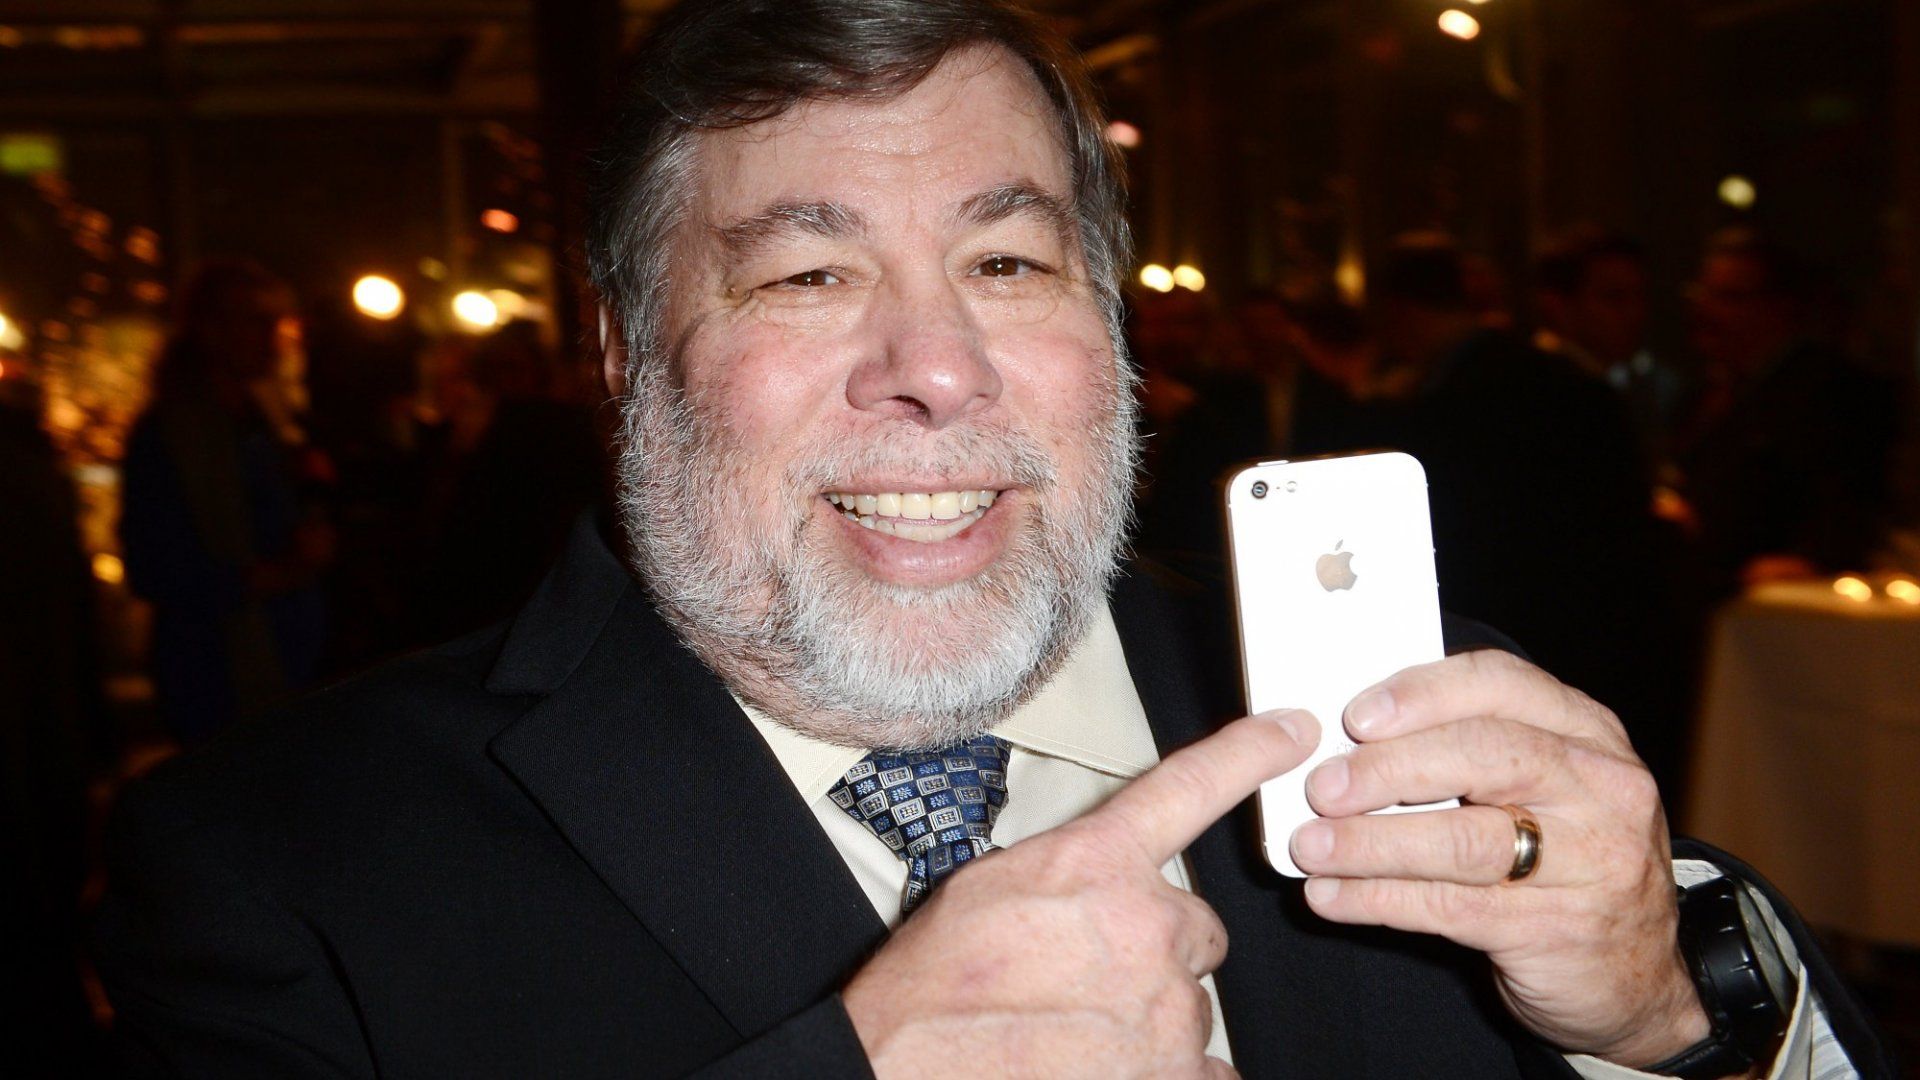 Apple co-founder Steve Wozniak to attend Baku summit